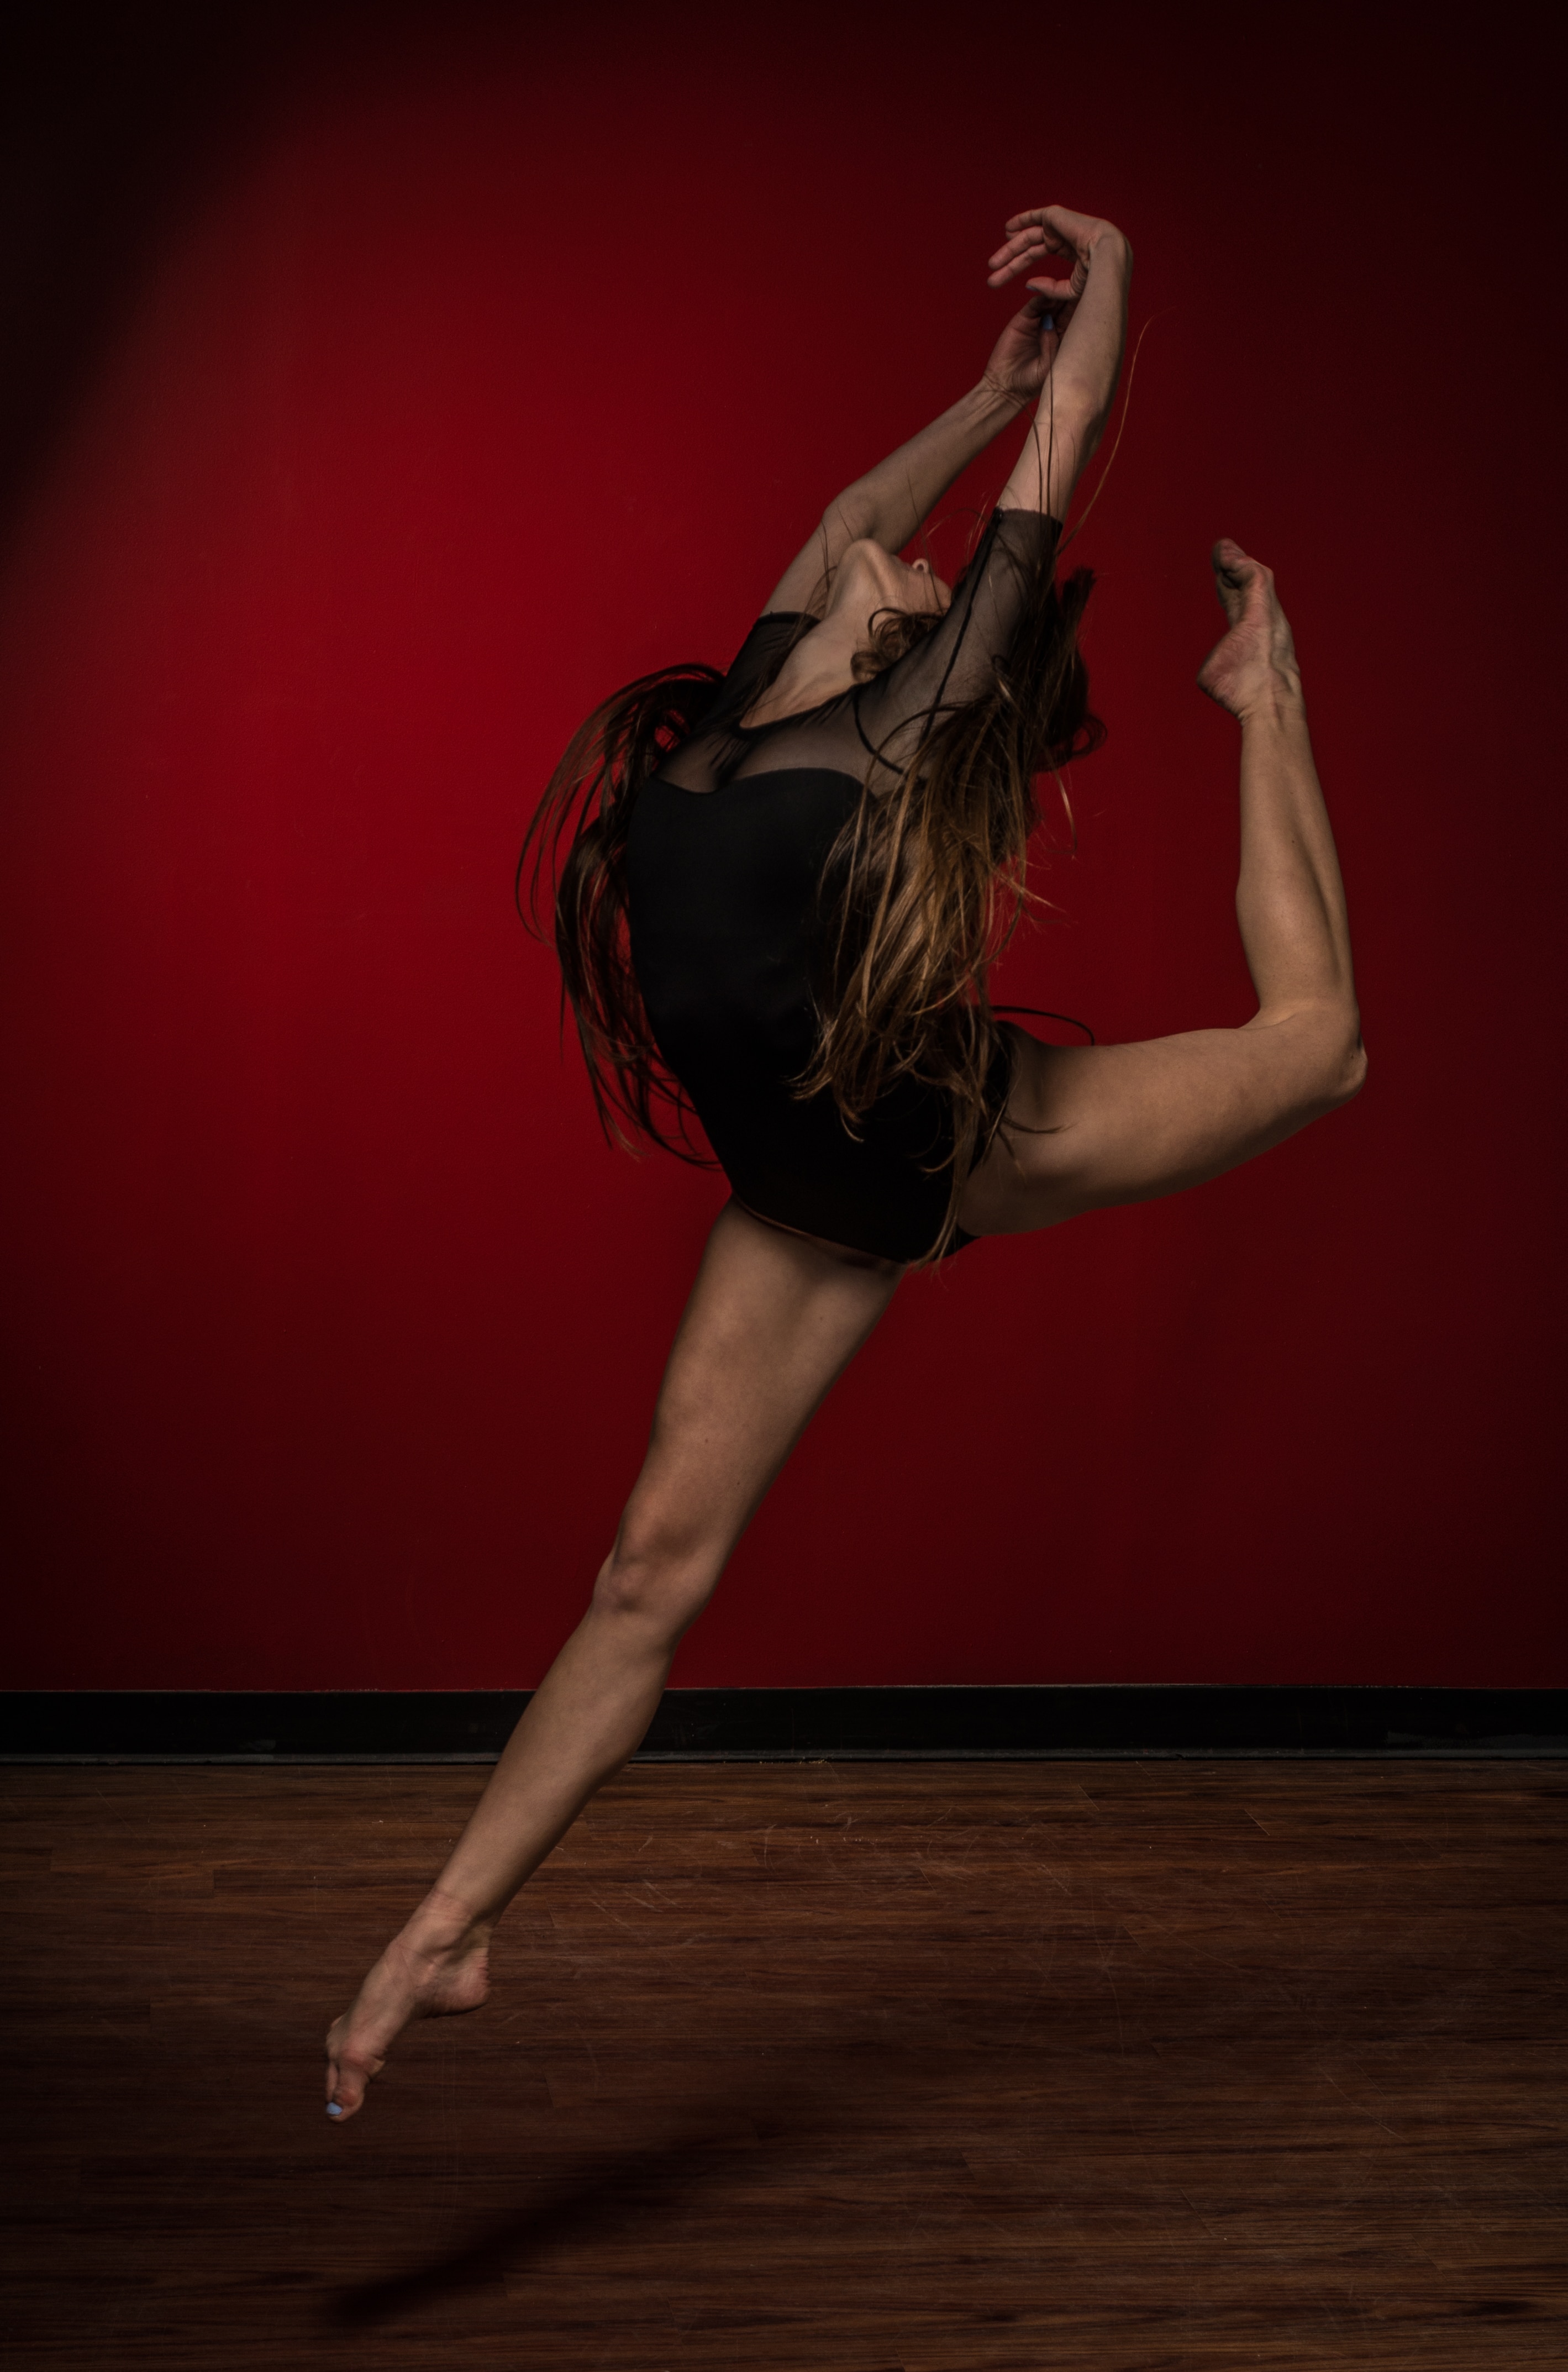 brunette haired woman in black leotard dancing ballet against red background